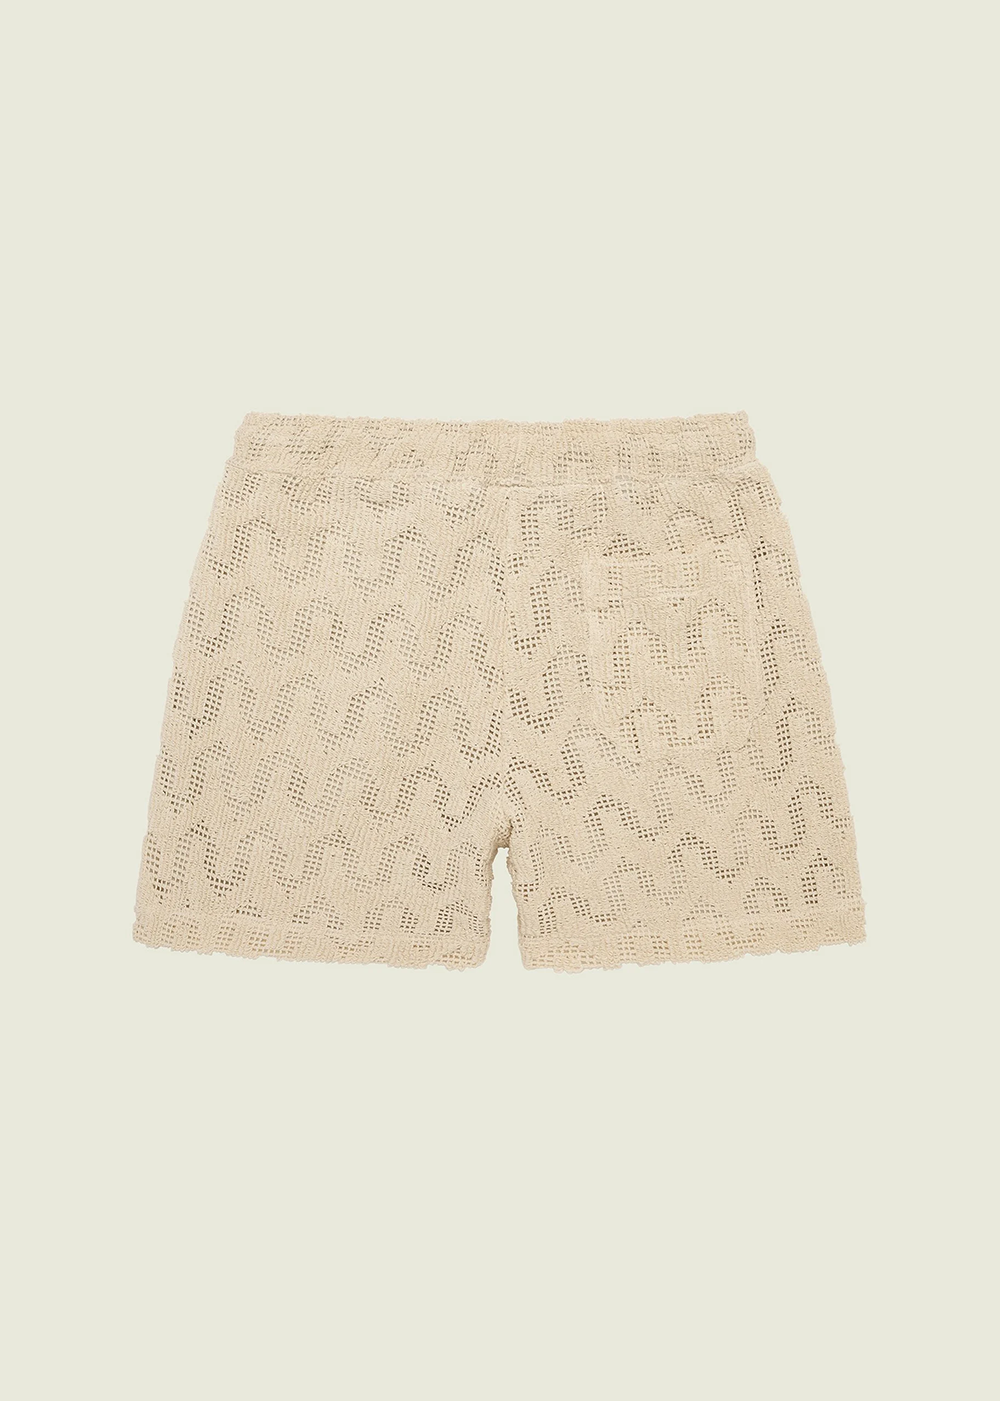 Atlas Crochet Shorts - OAS Company - Danali - 5013-01